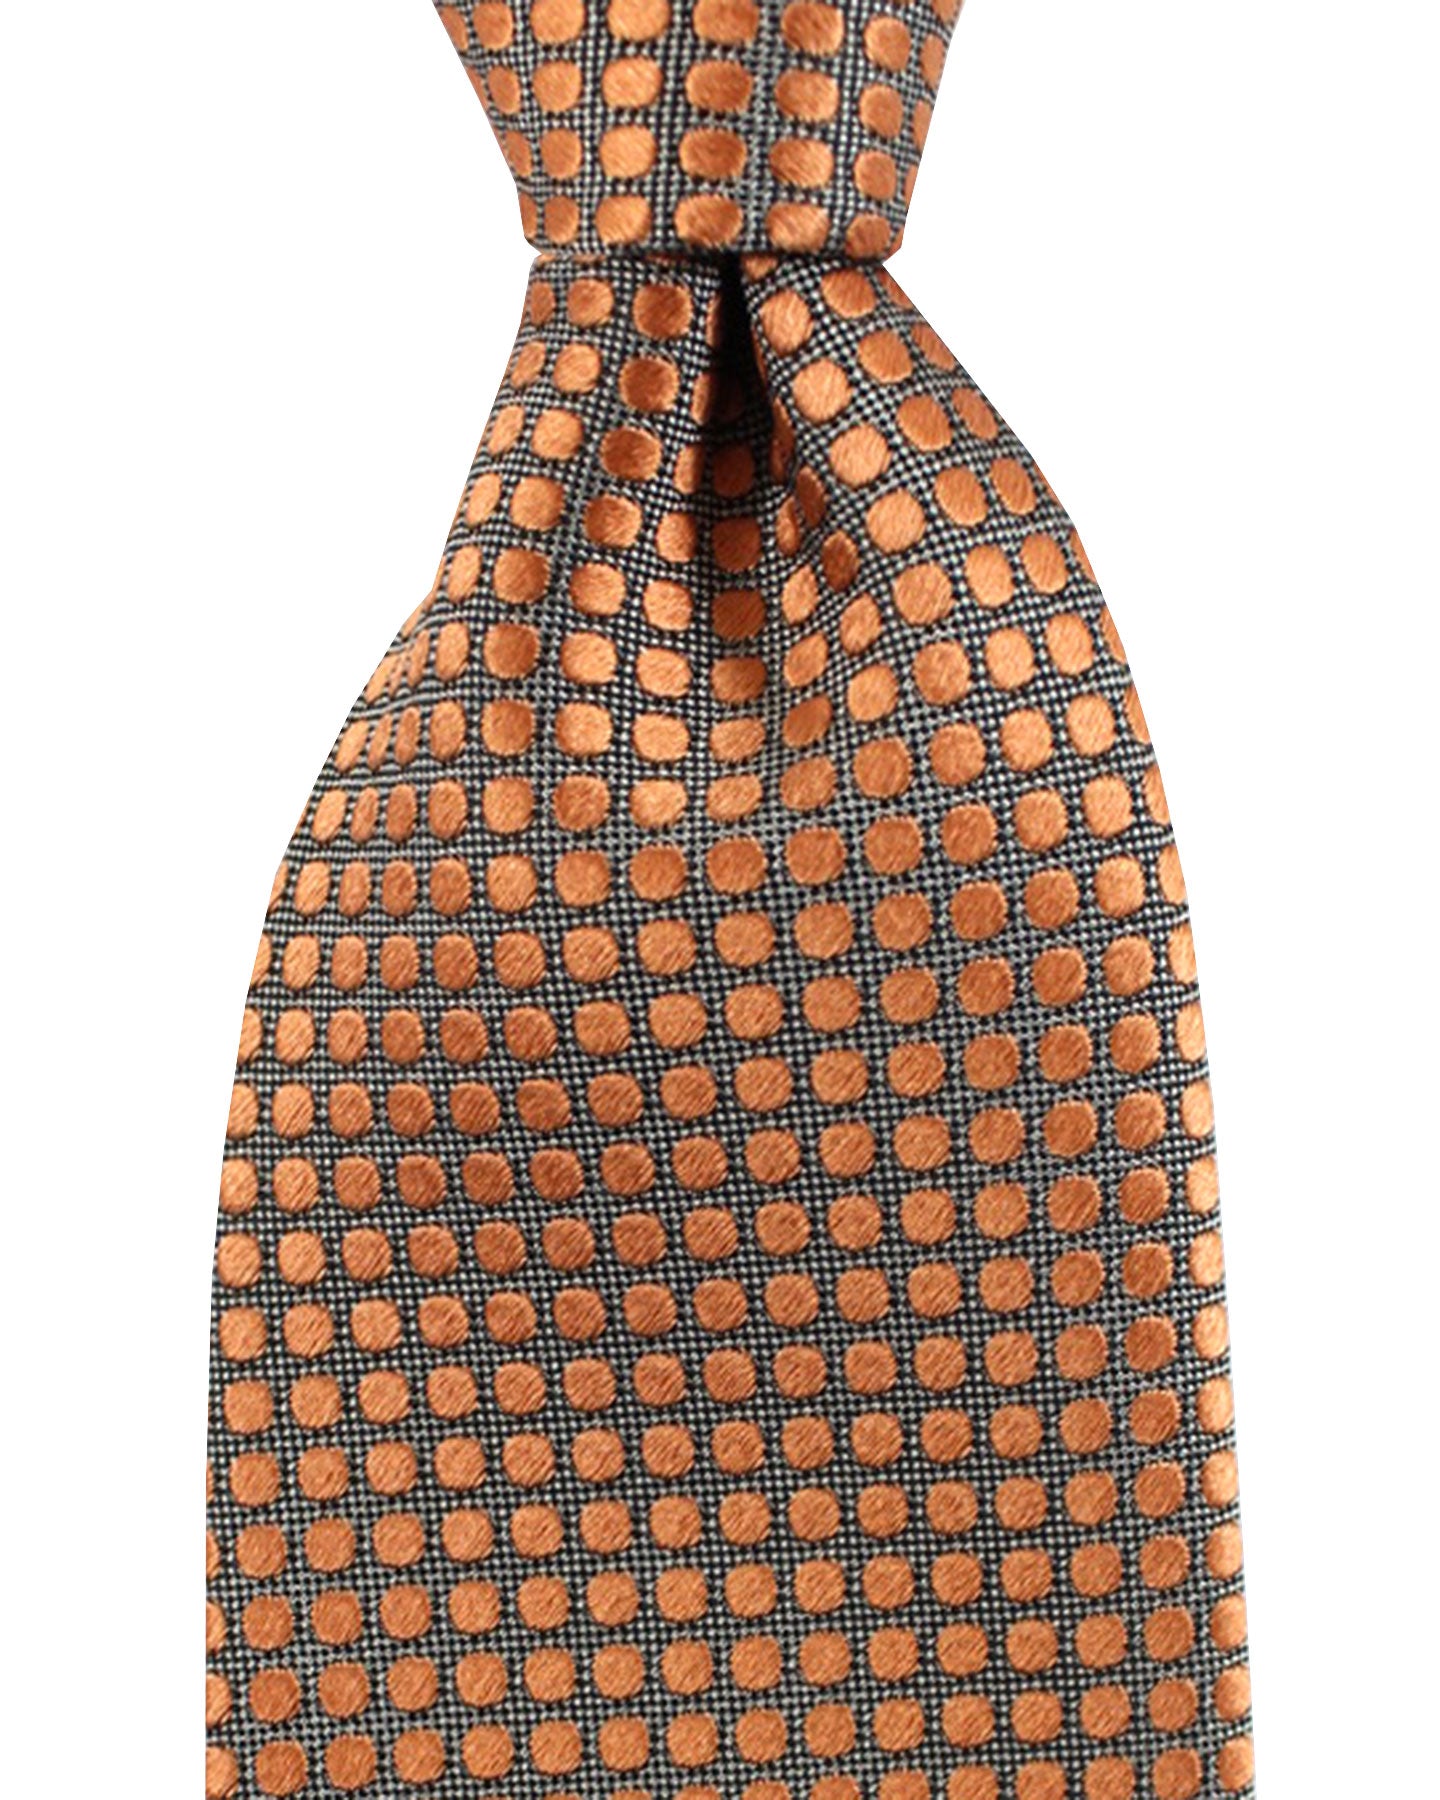 Tom Ford Wool Silk Tie Rust Orange Dots